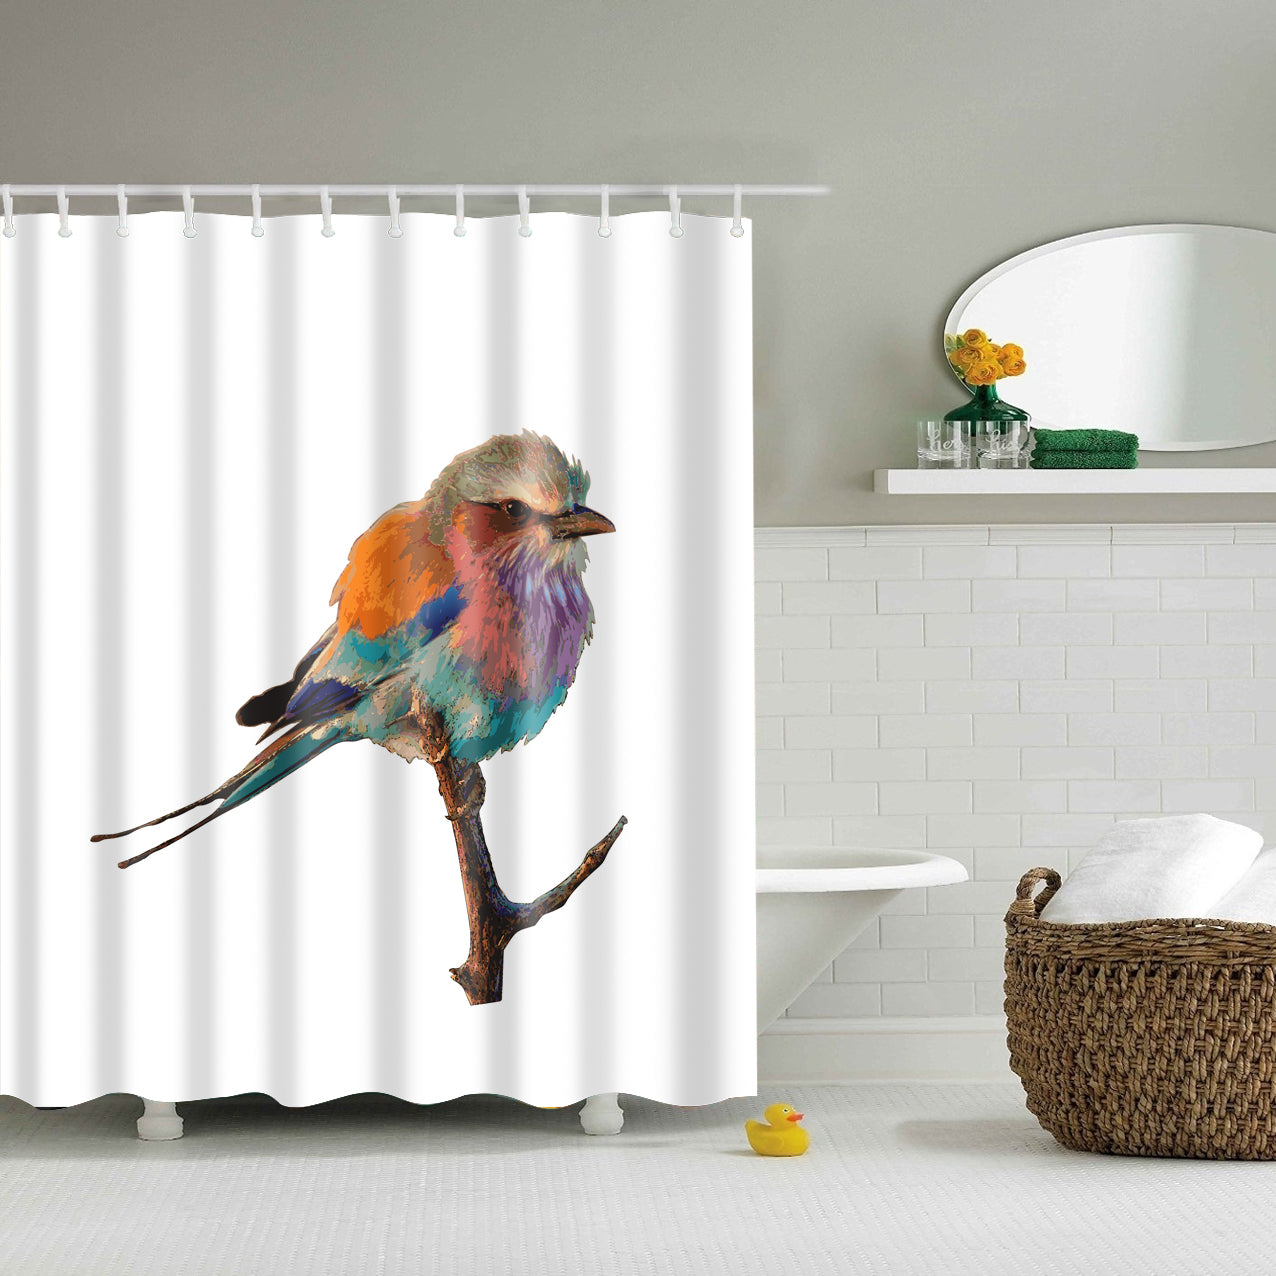 Running Bird Themed Shower Curtain